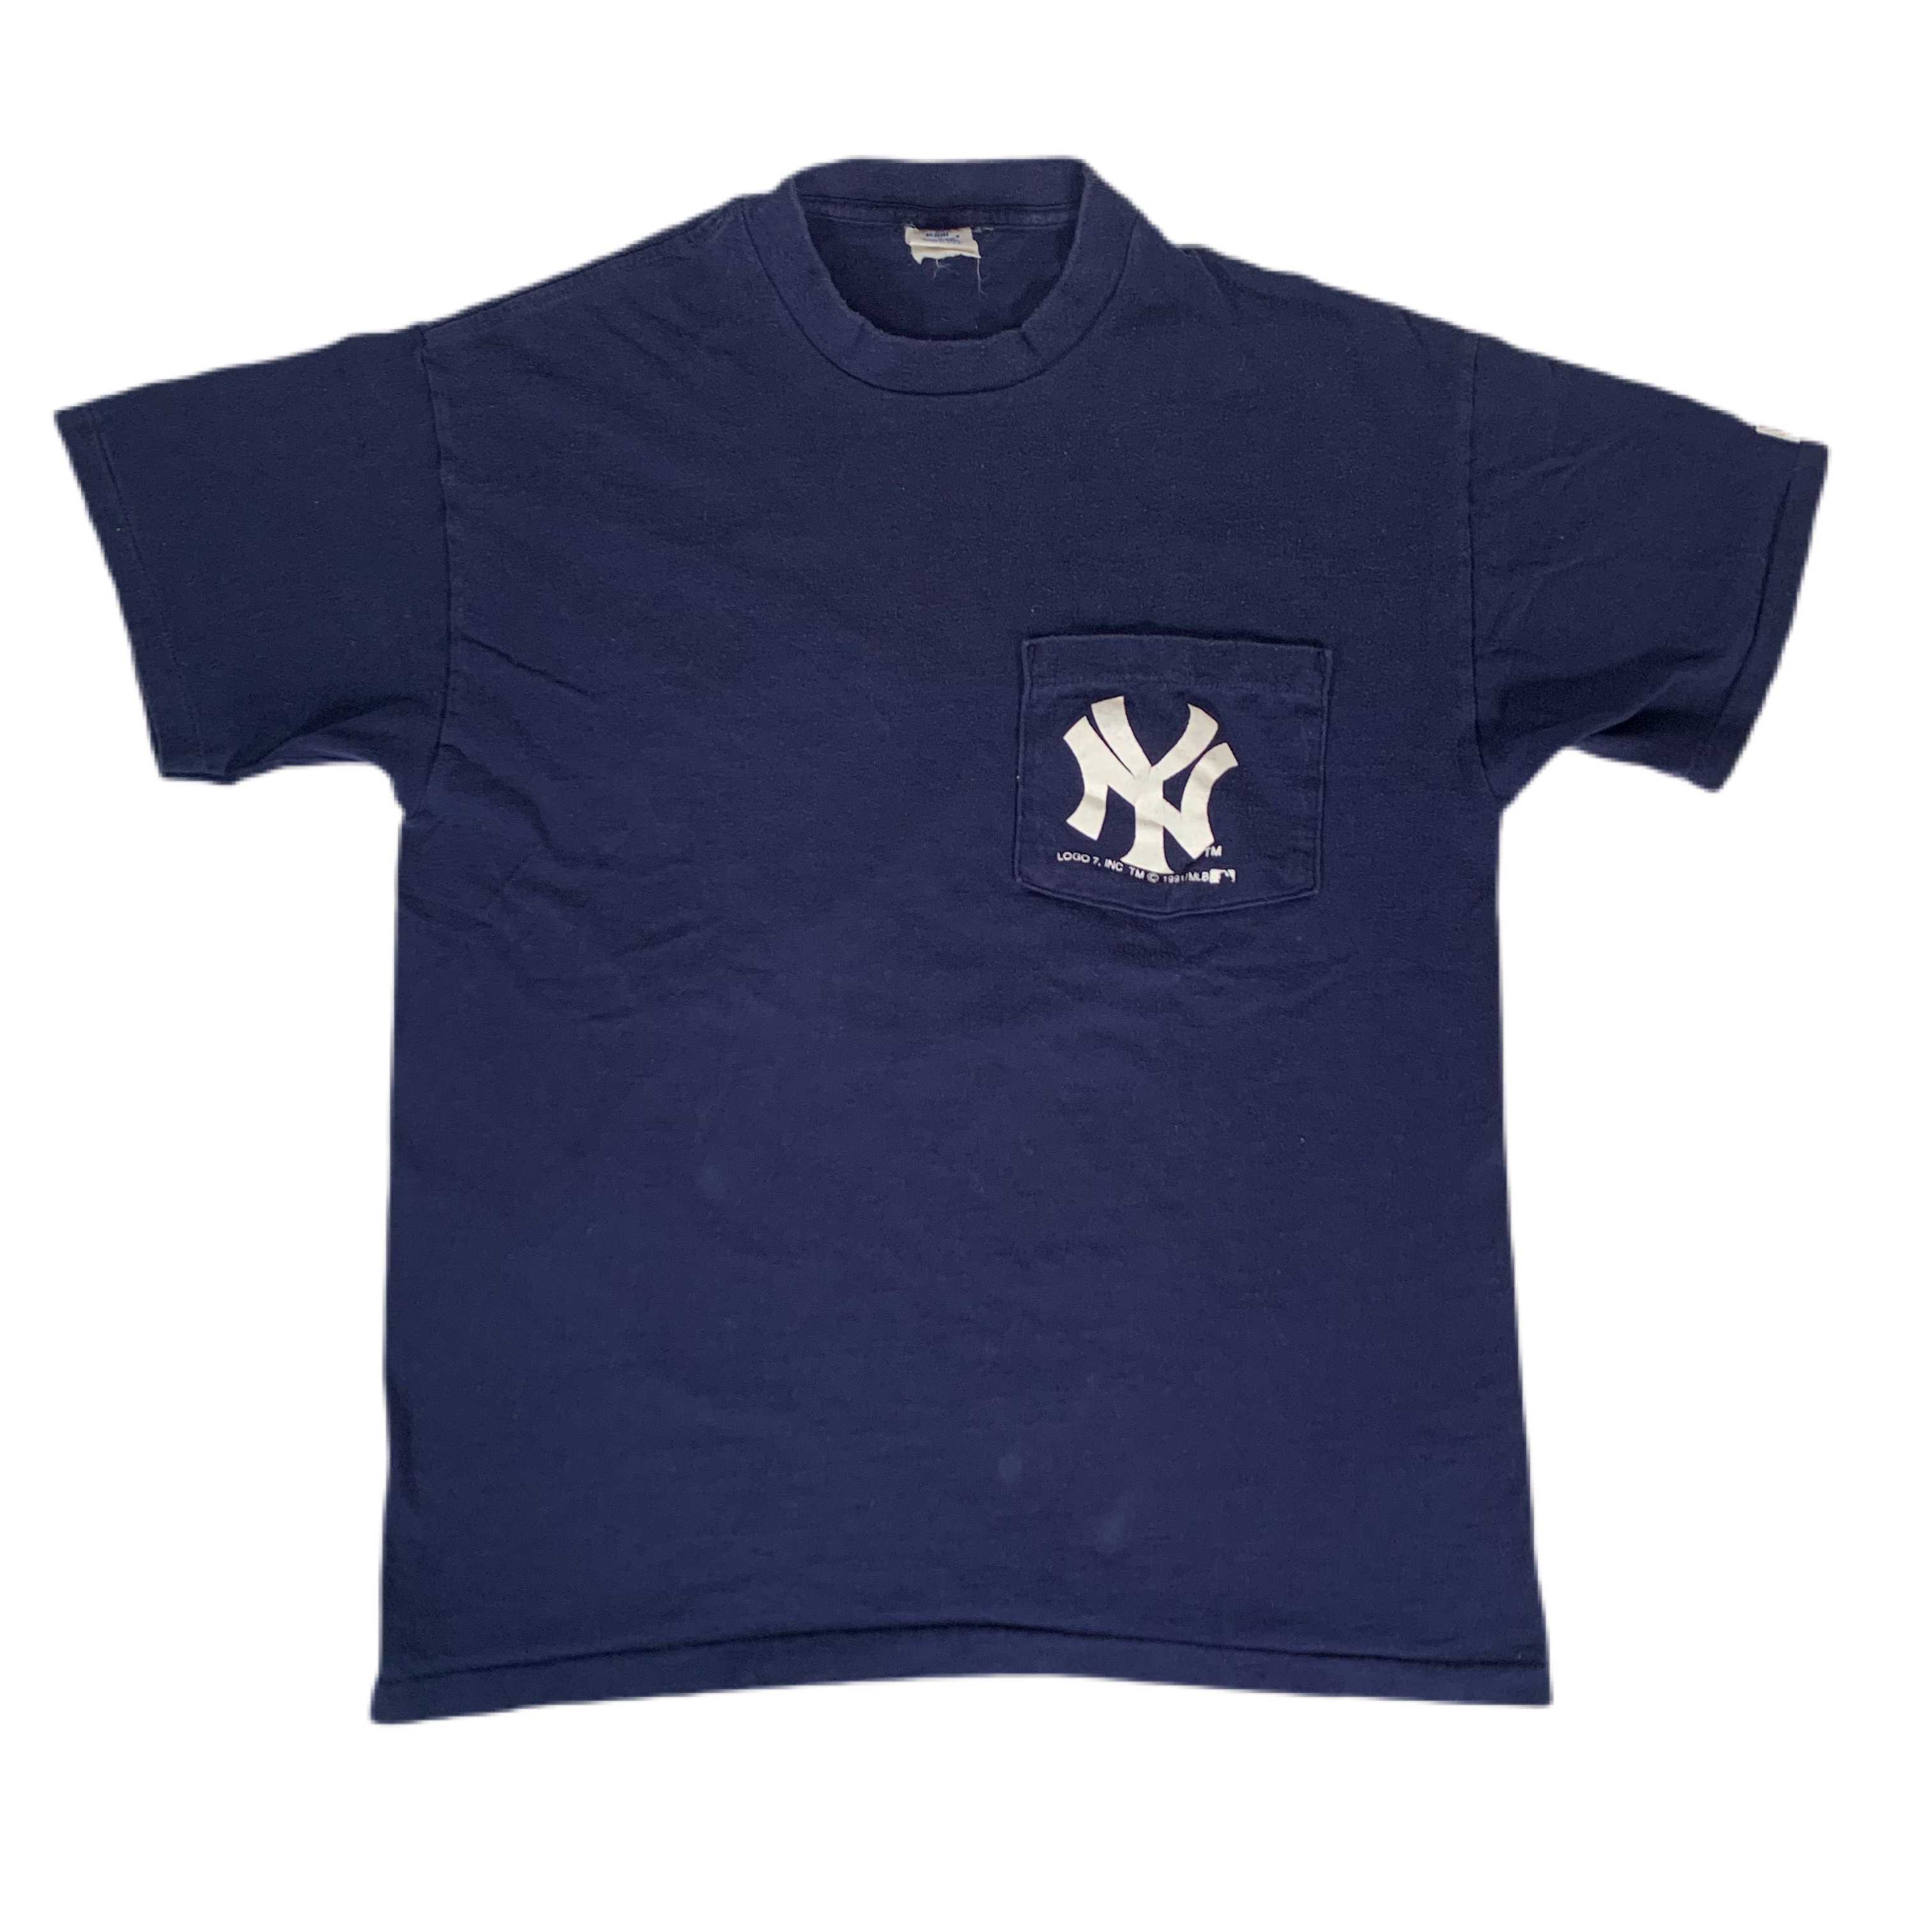 Yogi Berra New York Yankees Home Jersey by Majestic